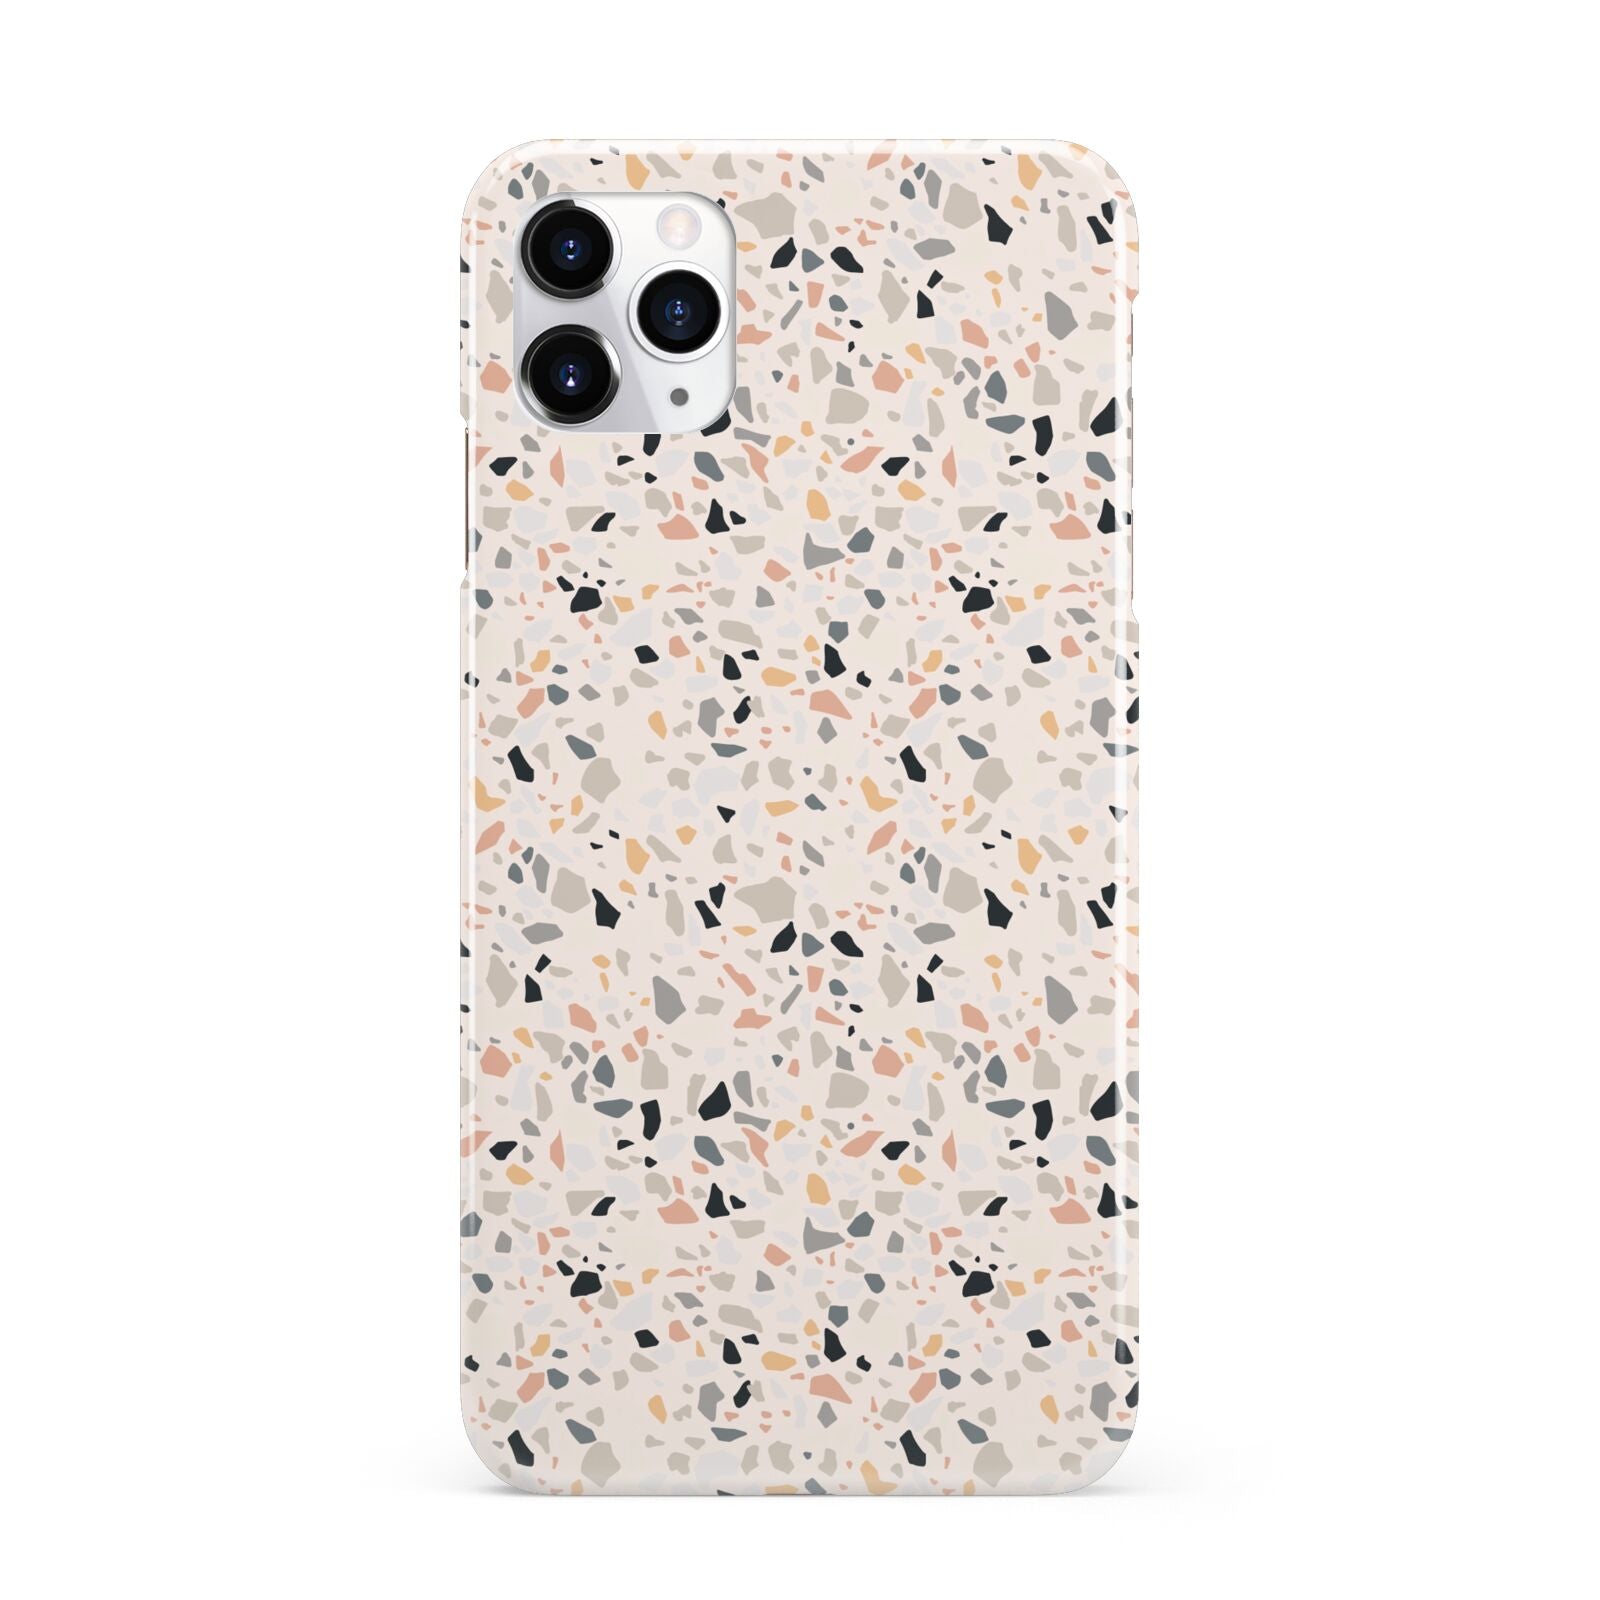 Terrazzo Stone iPhone 11 Pro Max 3D Snap Case